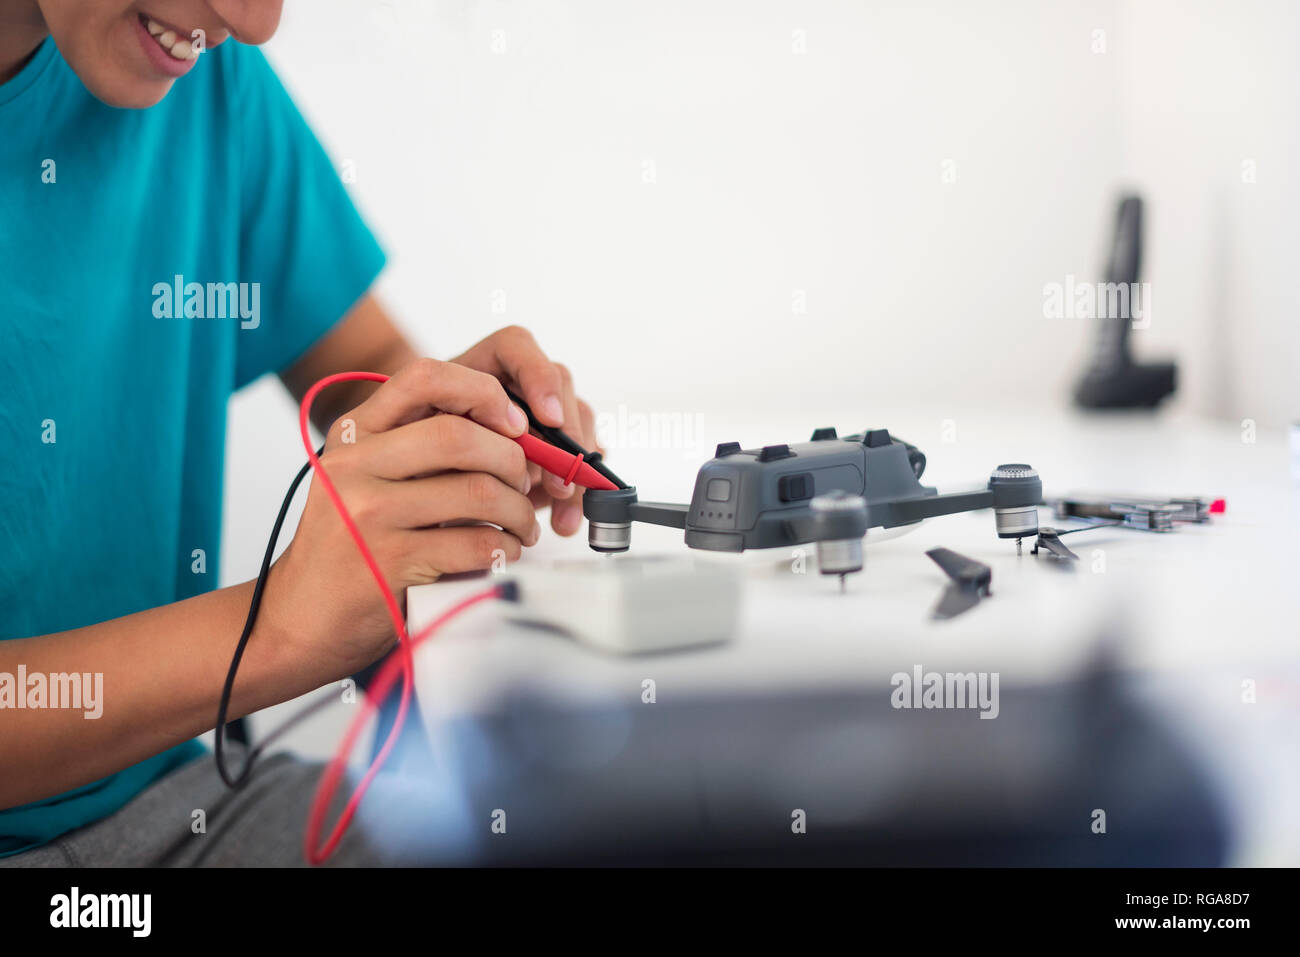 Boy repairing drone Stock Photo